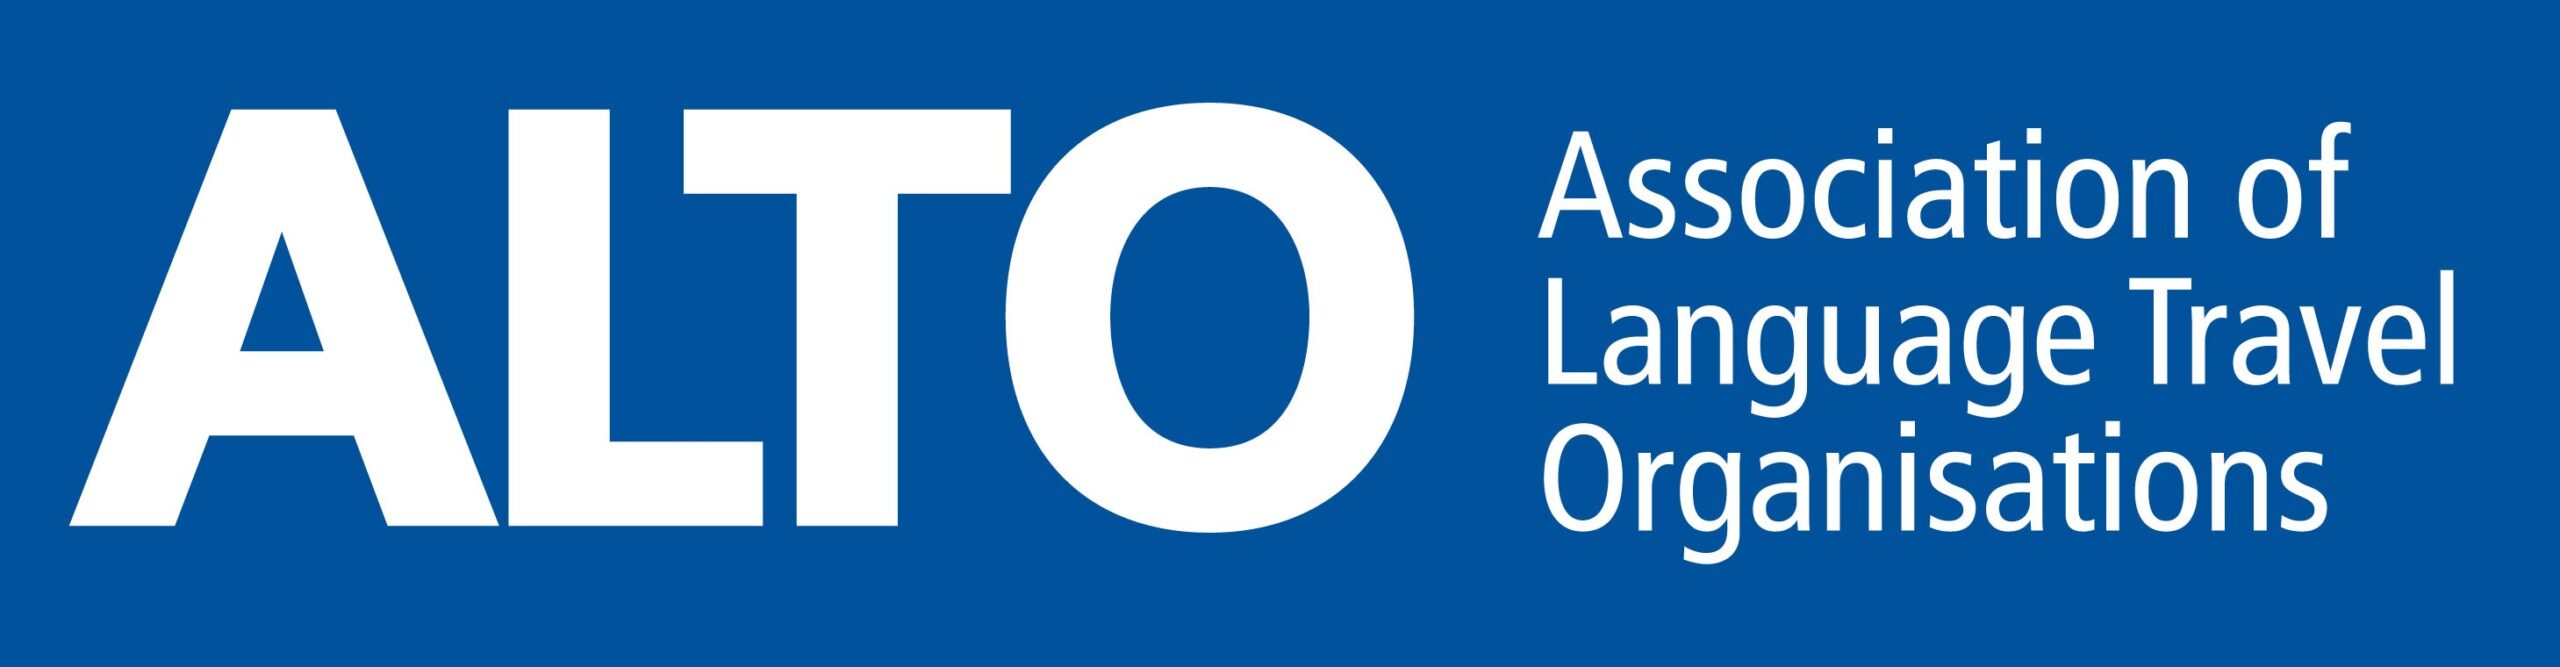 Association of Language Travel Organisations logo